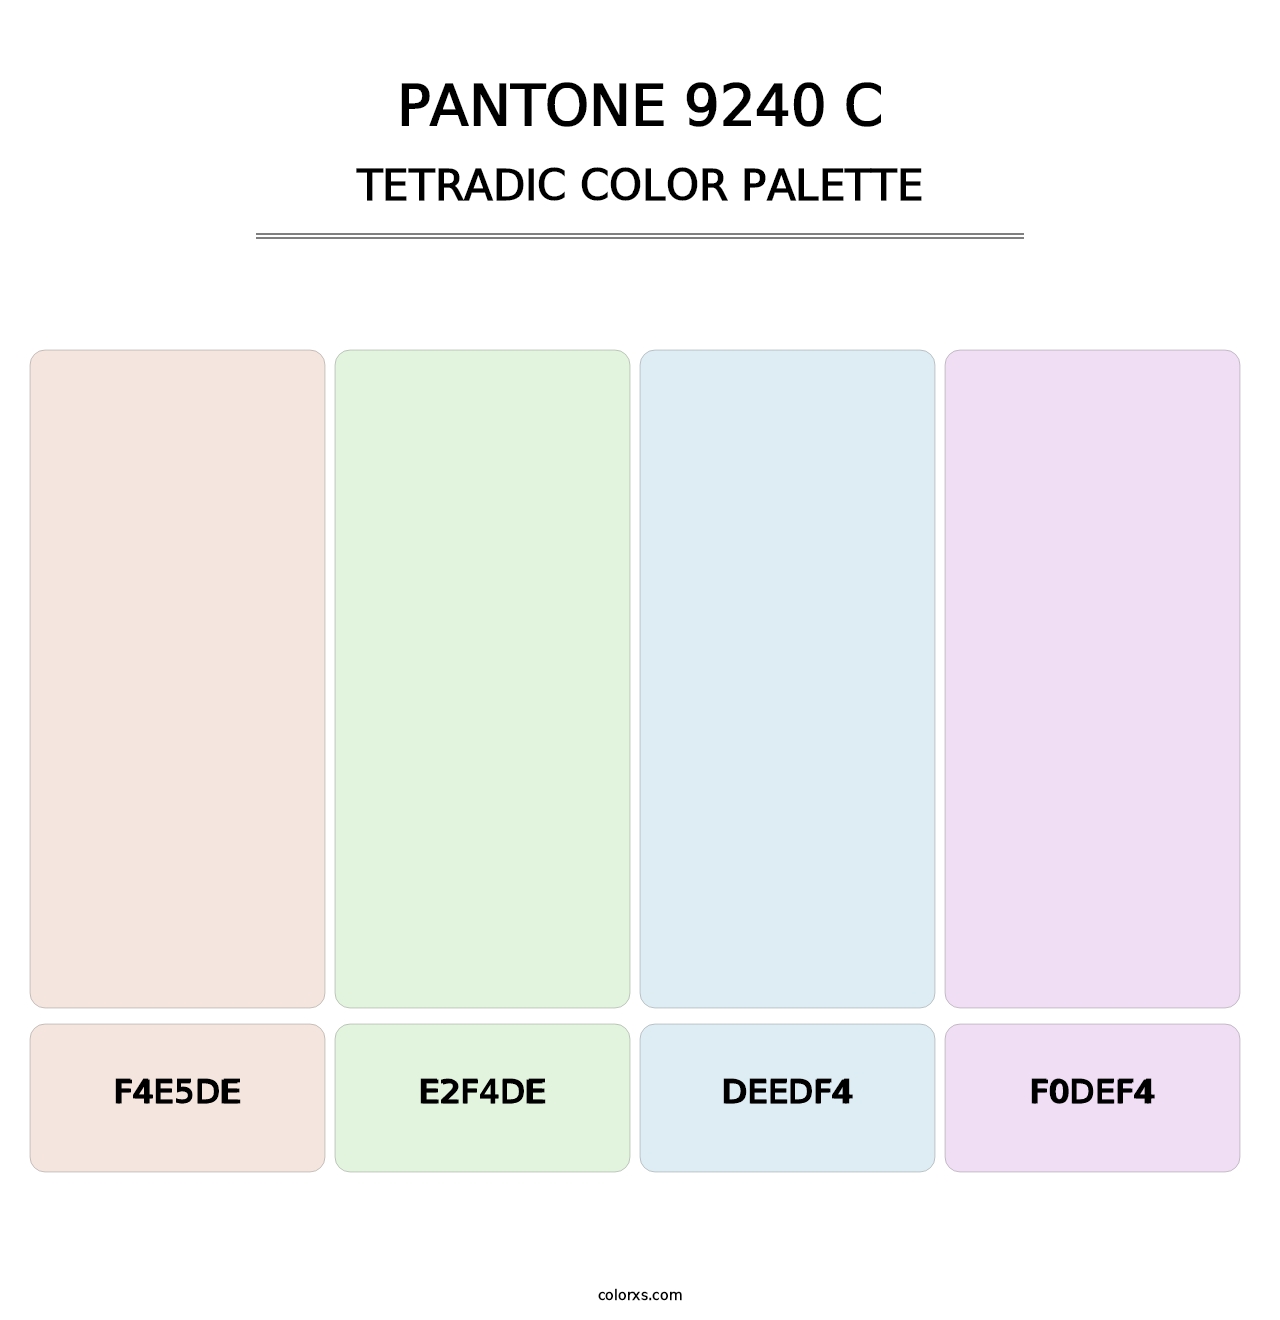 PANTONE 9240 C - Tetradic Color Palette